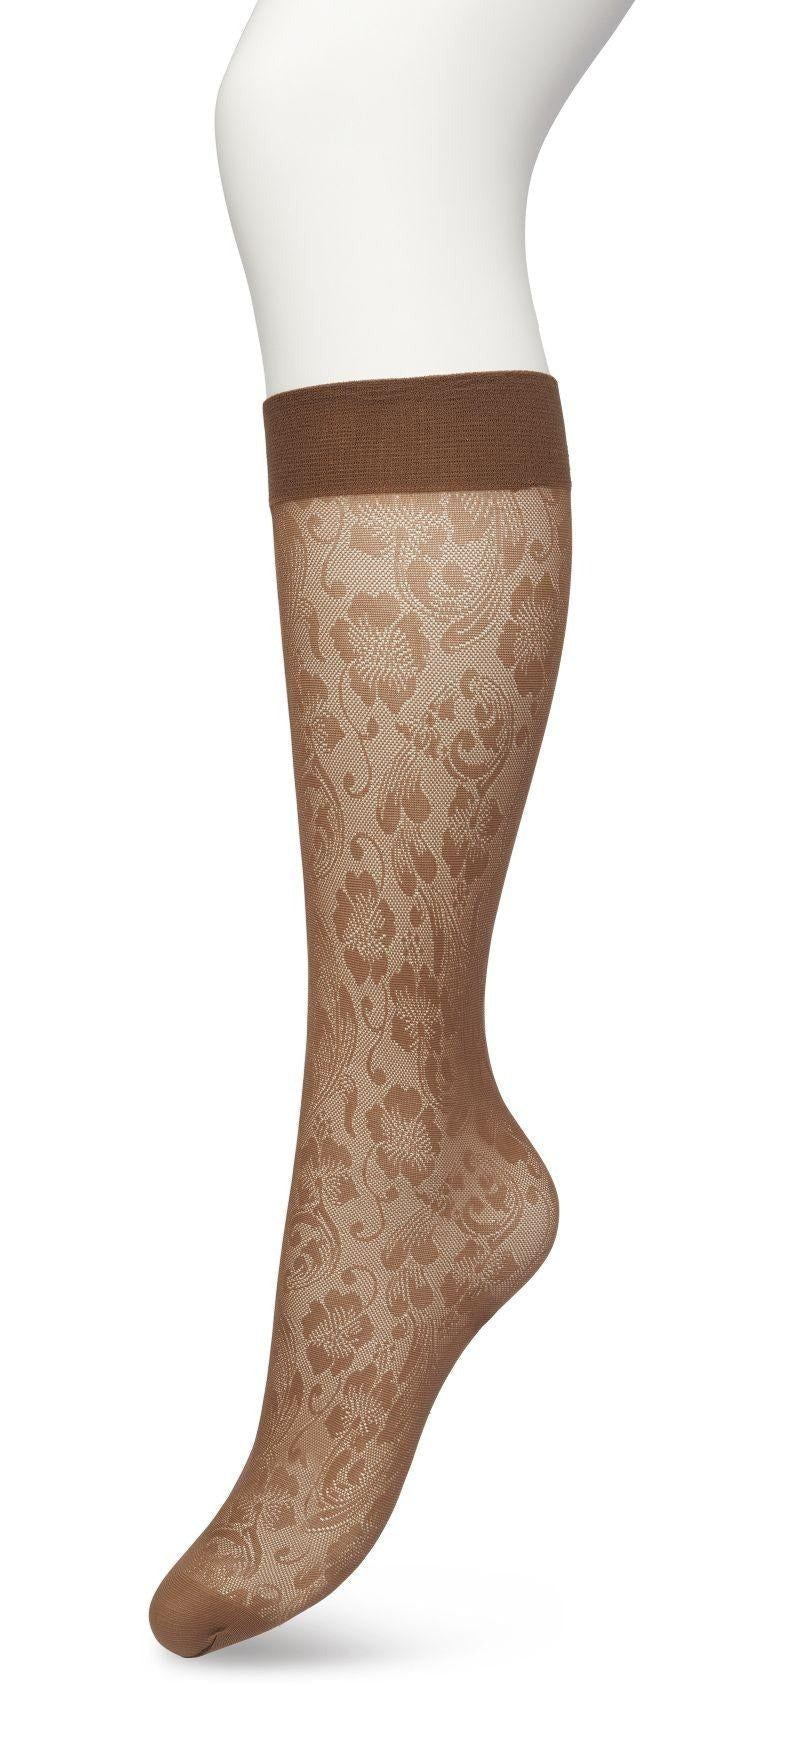 Bonnie Doon BP221803 Fancy Flowers Knee-Highs - Semi-sheer floral lace style patterned knee-high socks in light brown (bracken)